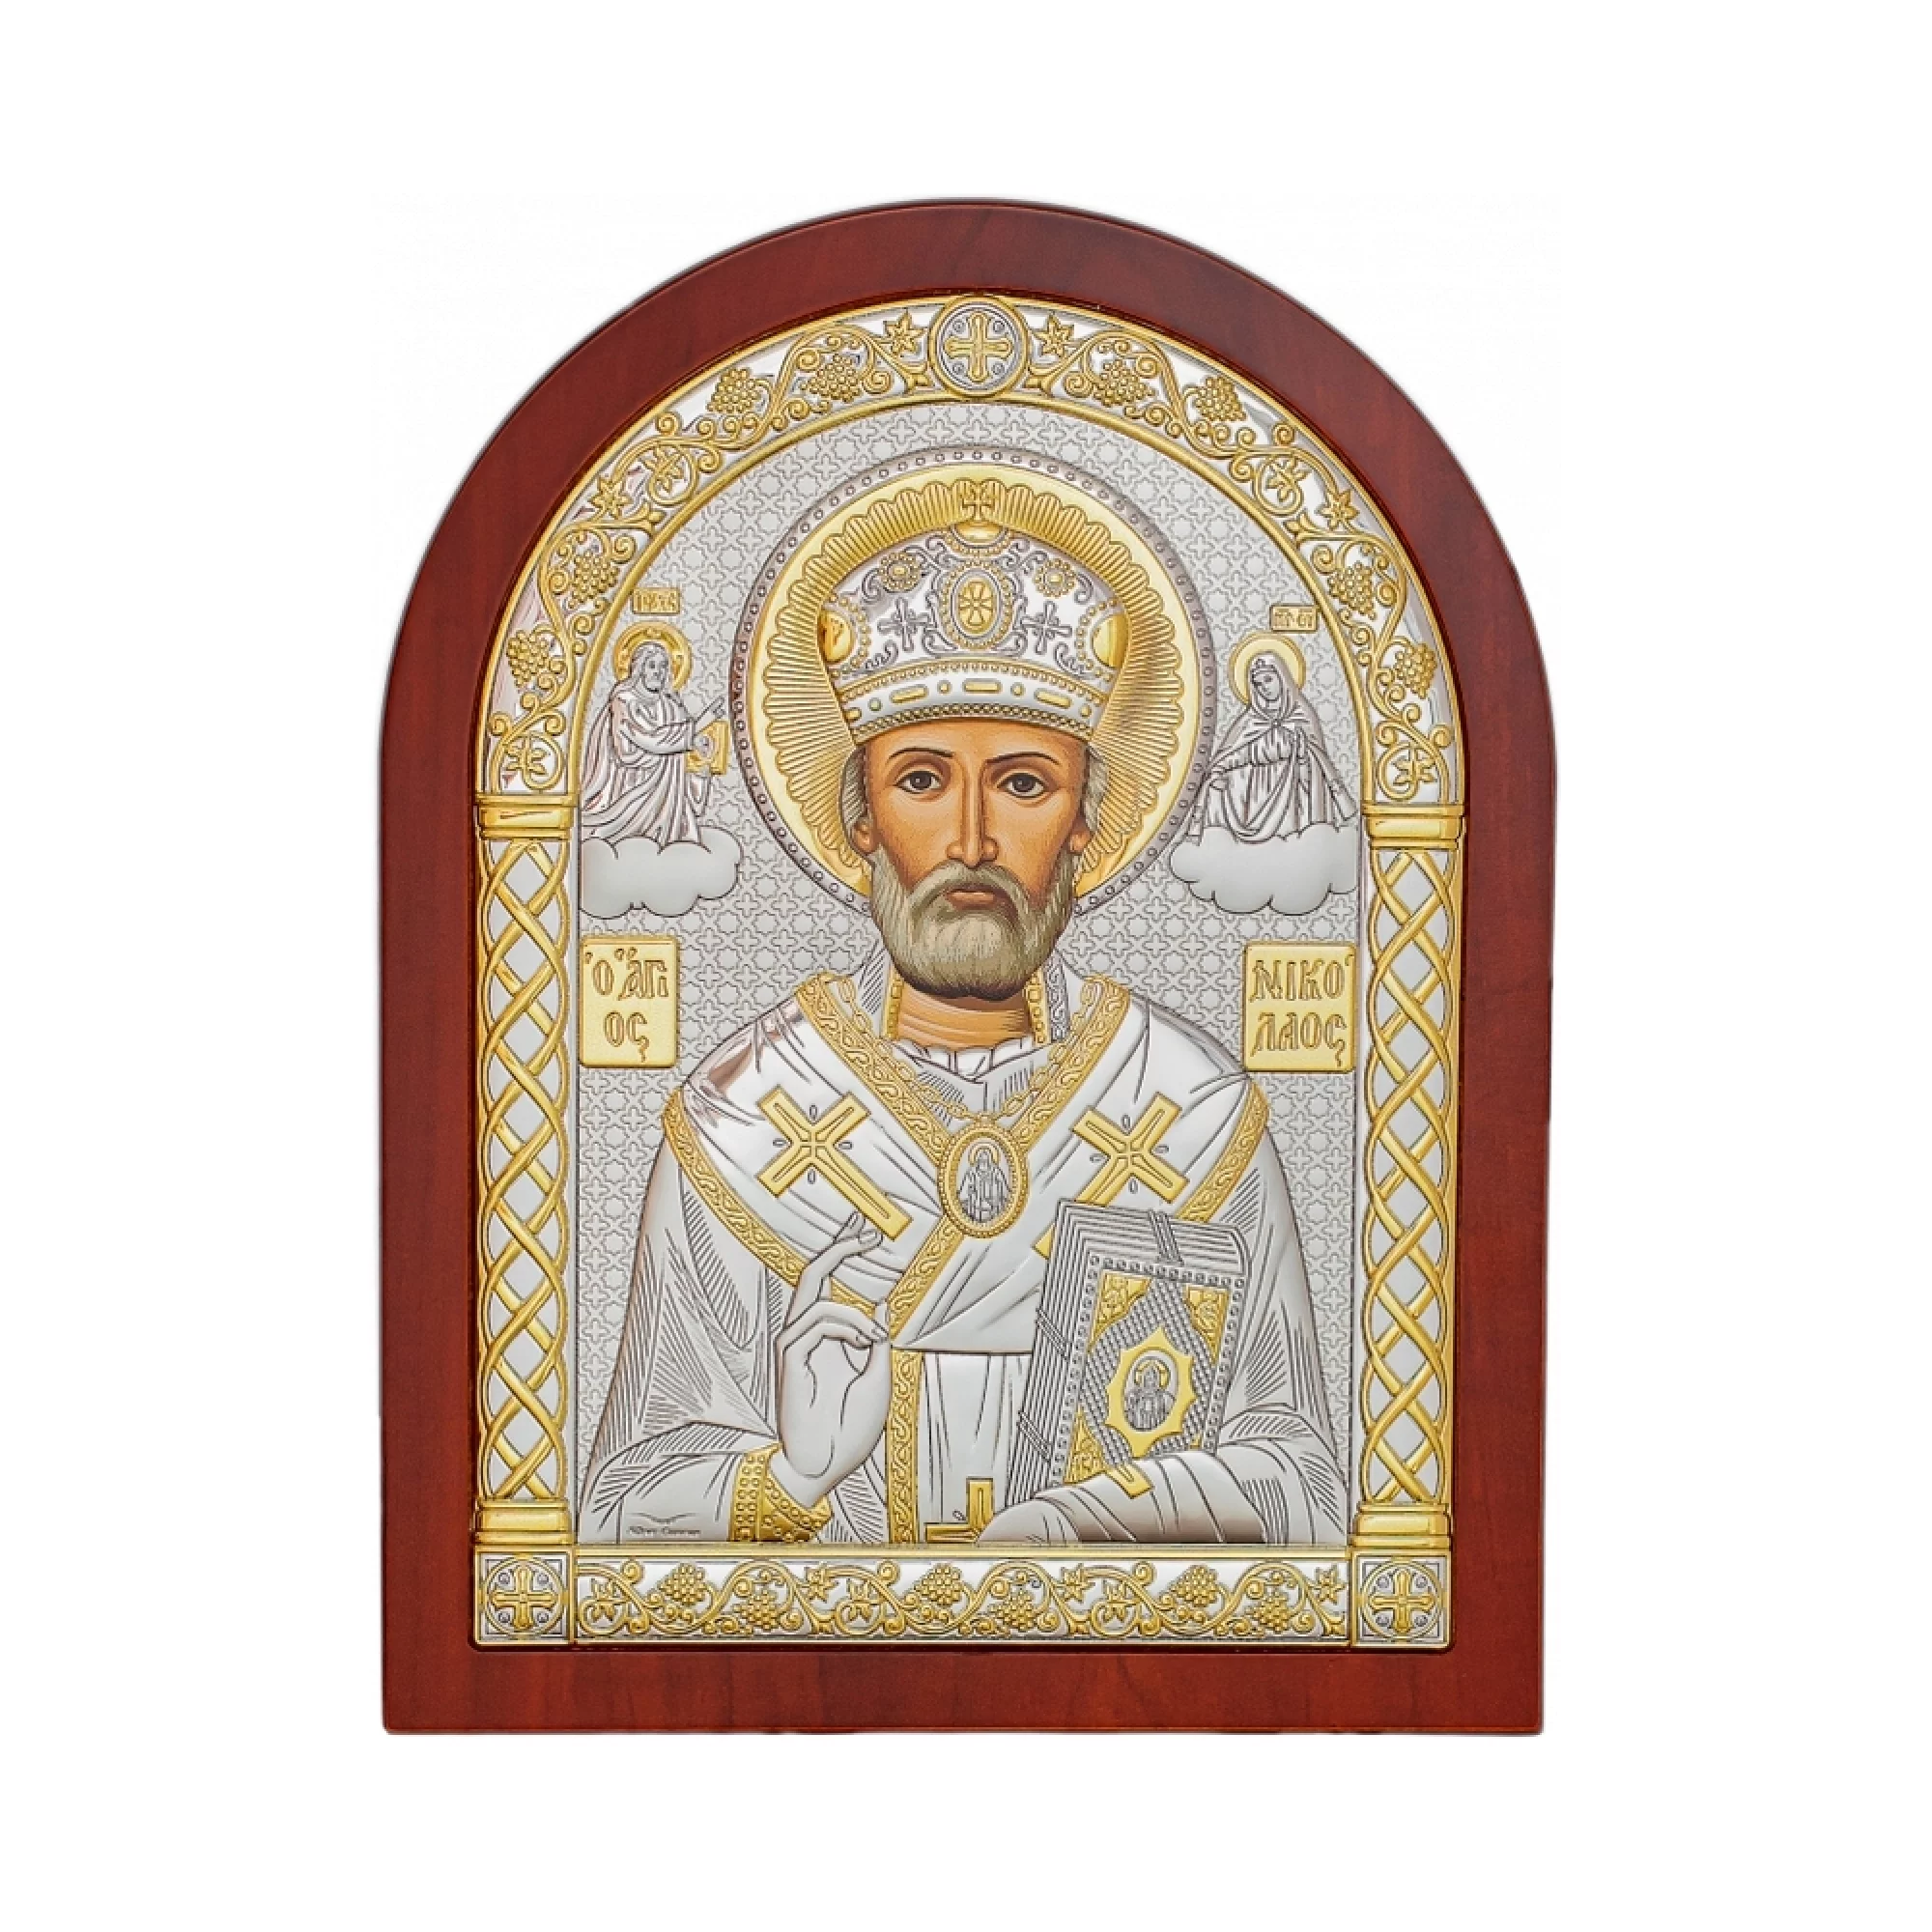 Икона из серебра "Николай чудотворец" 105х140 мм - 1309364 – изображение 1